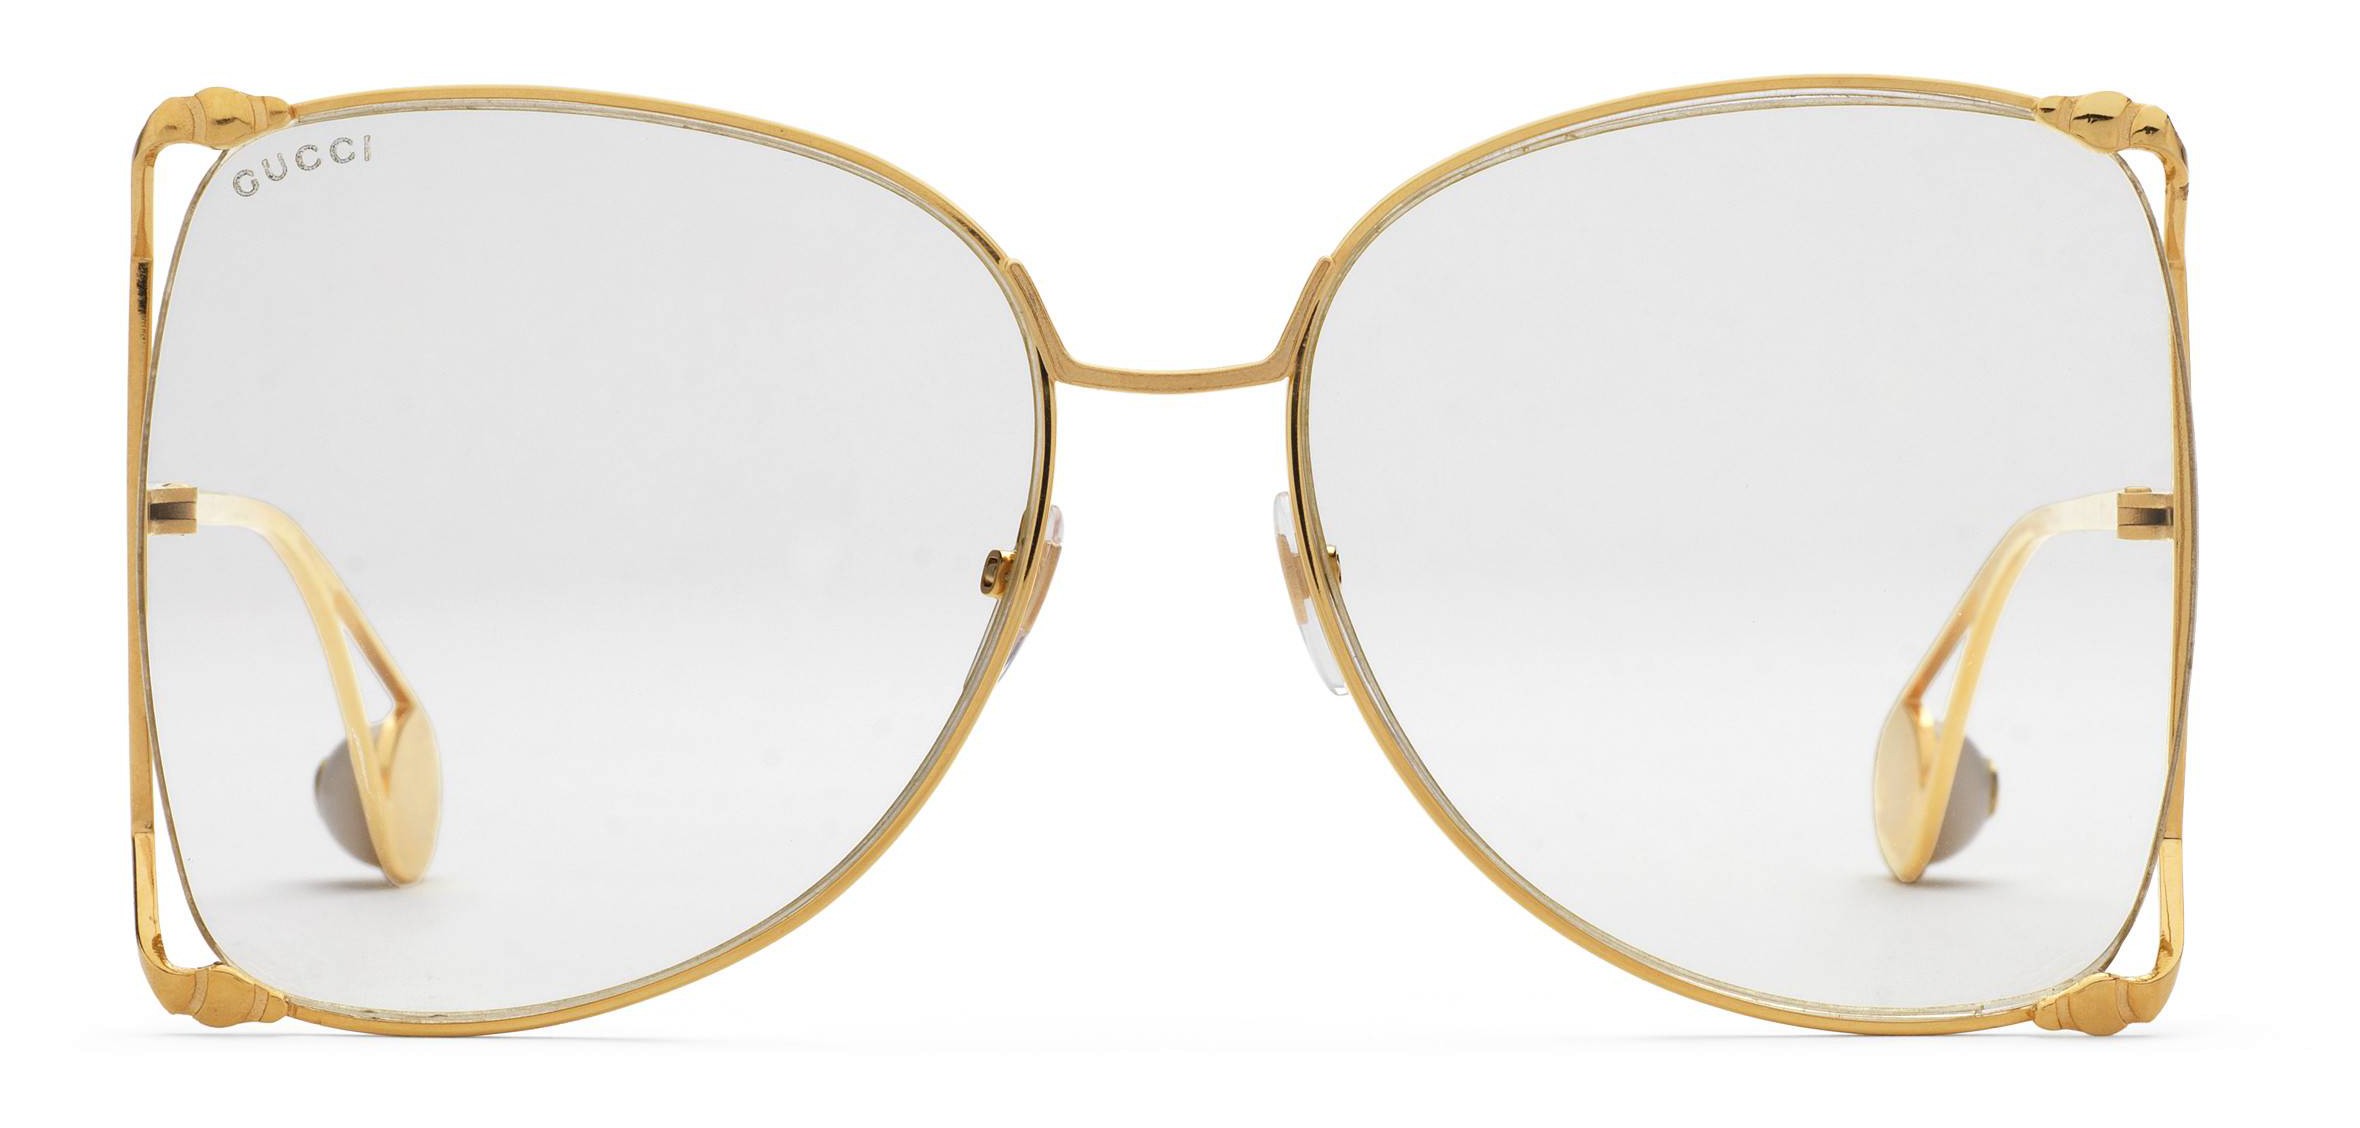 Gucci - Oversized Round Metal Glasses - Gold - Gucci Eyewear - Avvenice